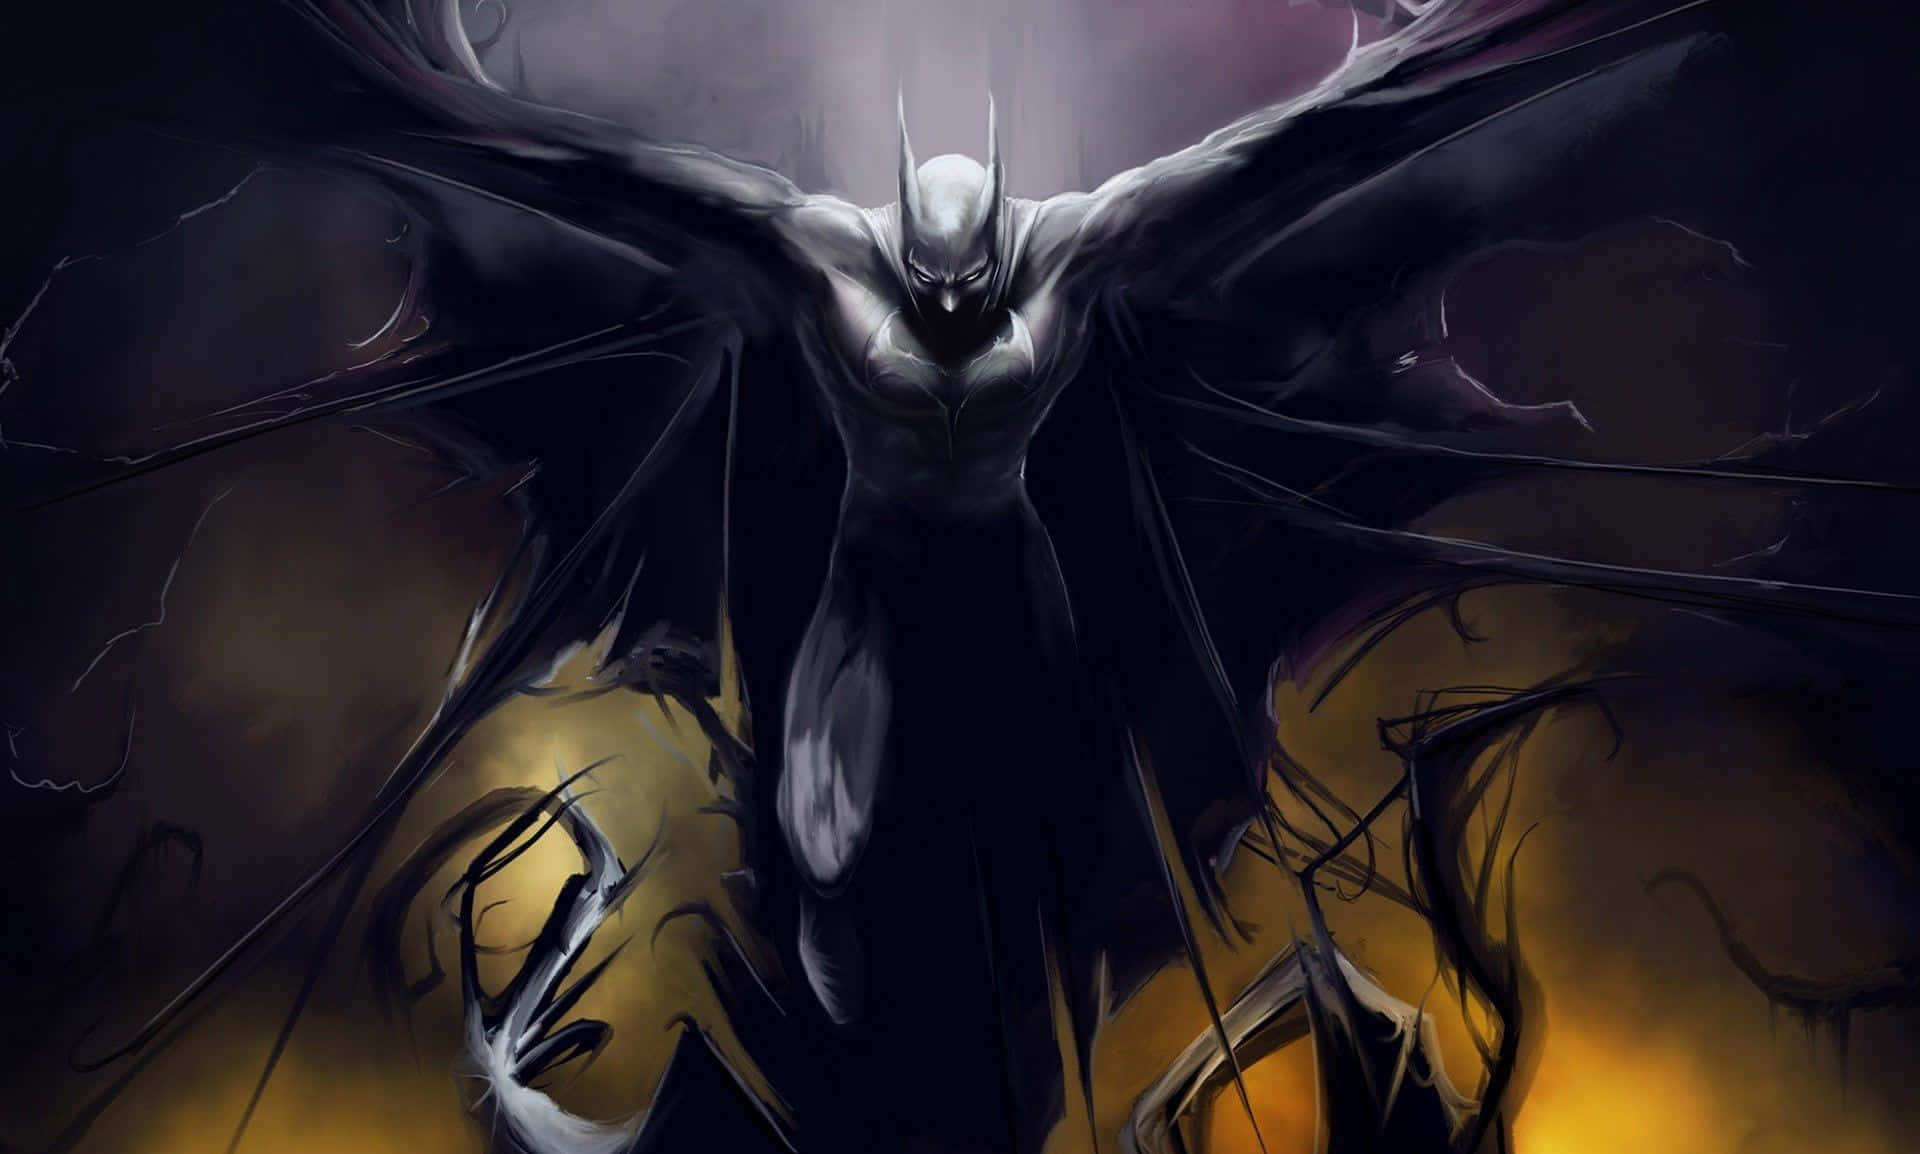 The Dark Knight guards Gotham City